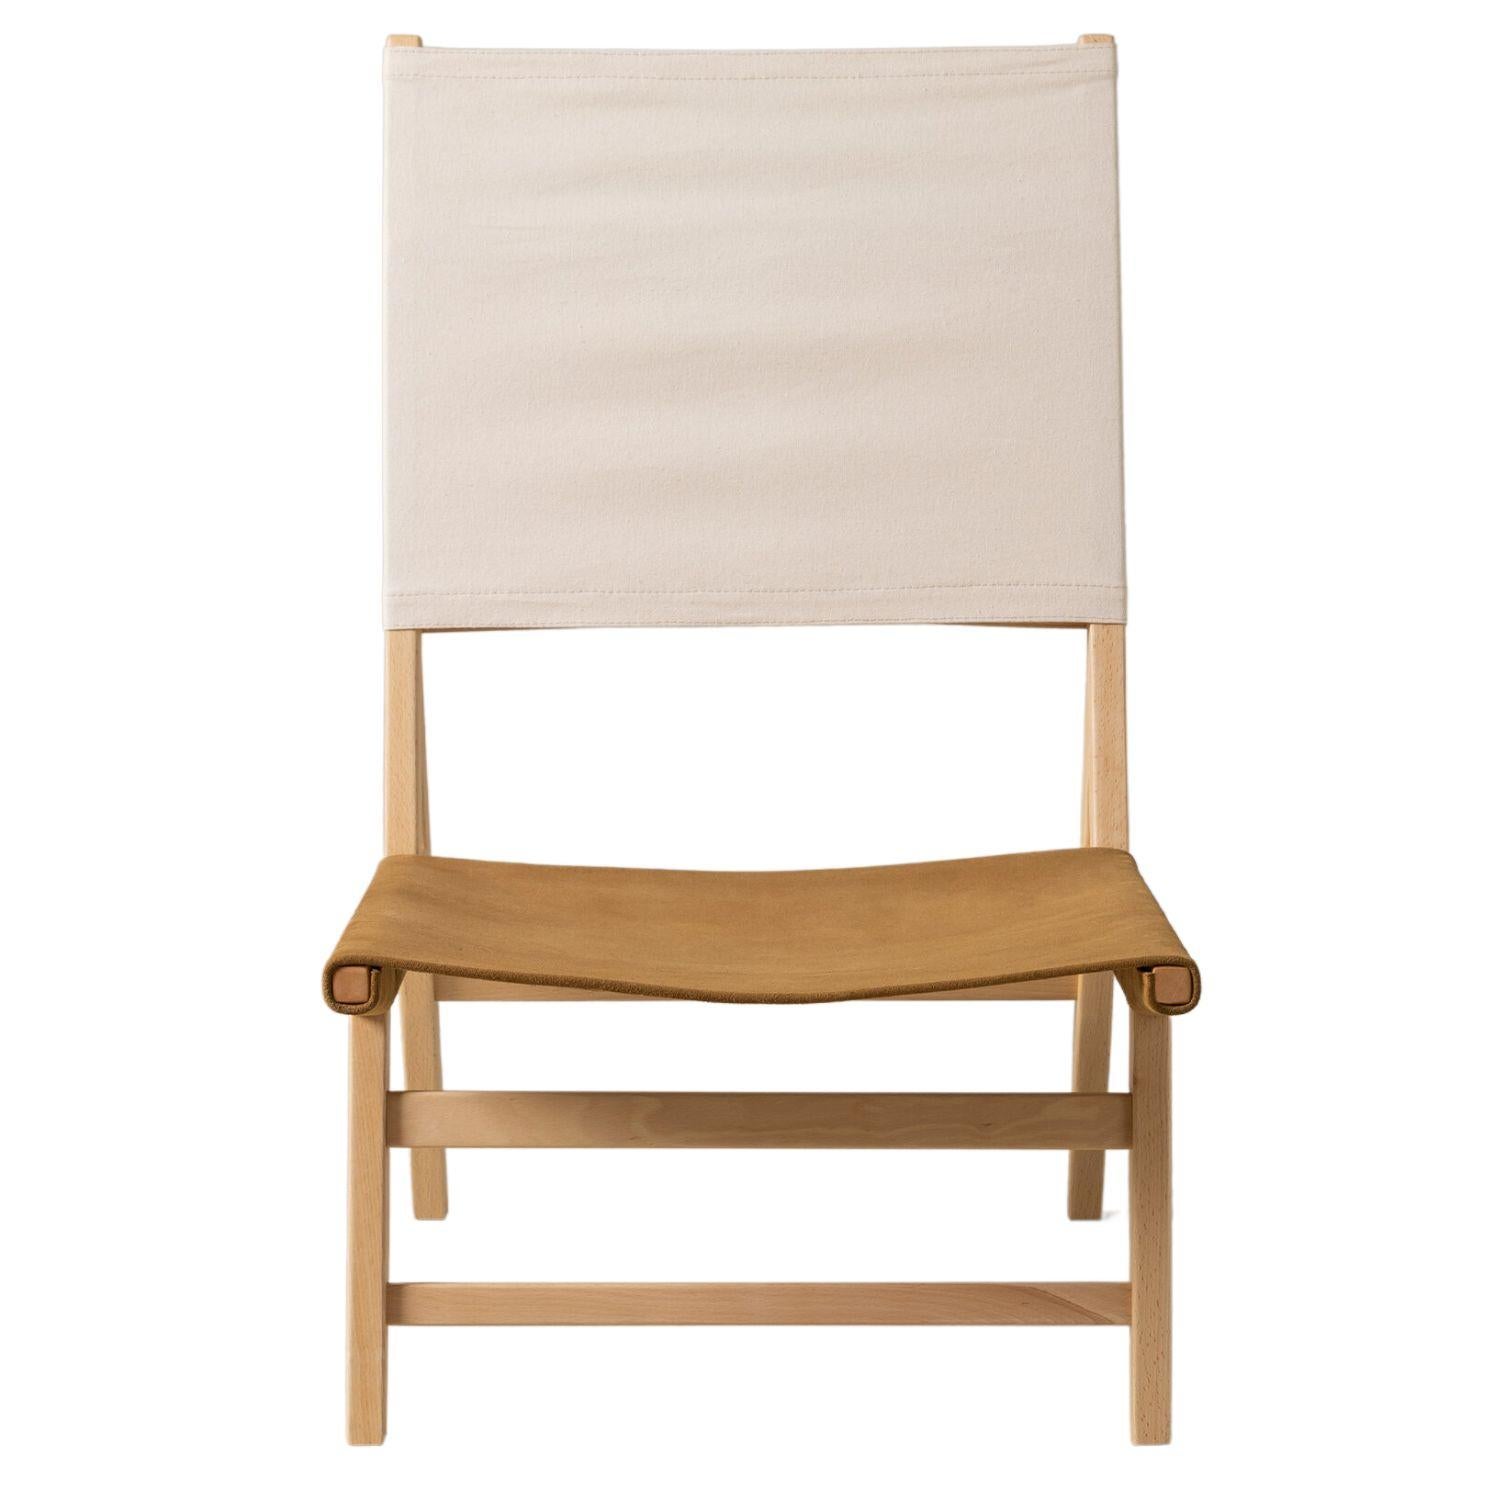 Spanish Correa & Milá 'Barceloneta' Outdoor Chair in Leather and Canvas for Santa & Cole For Sale